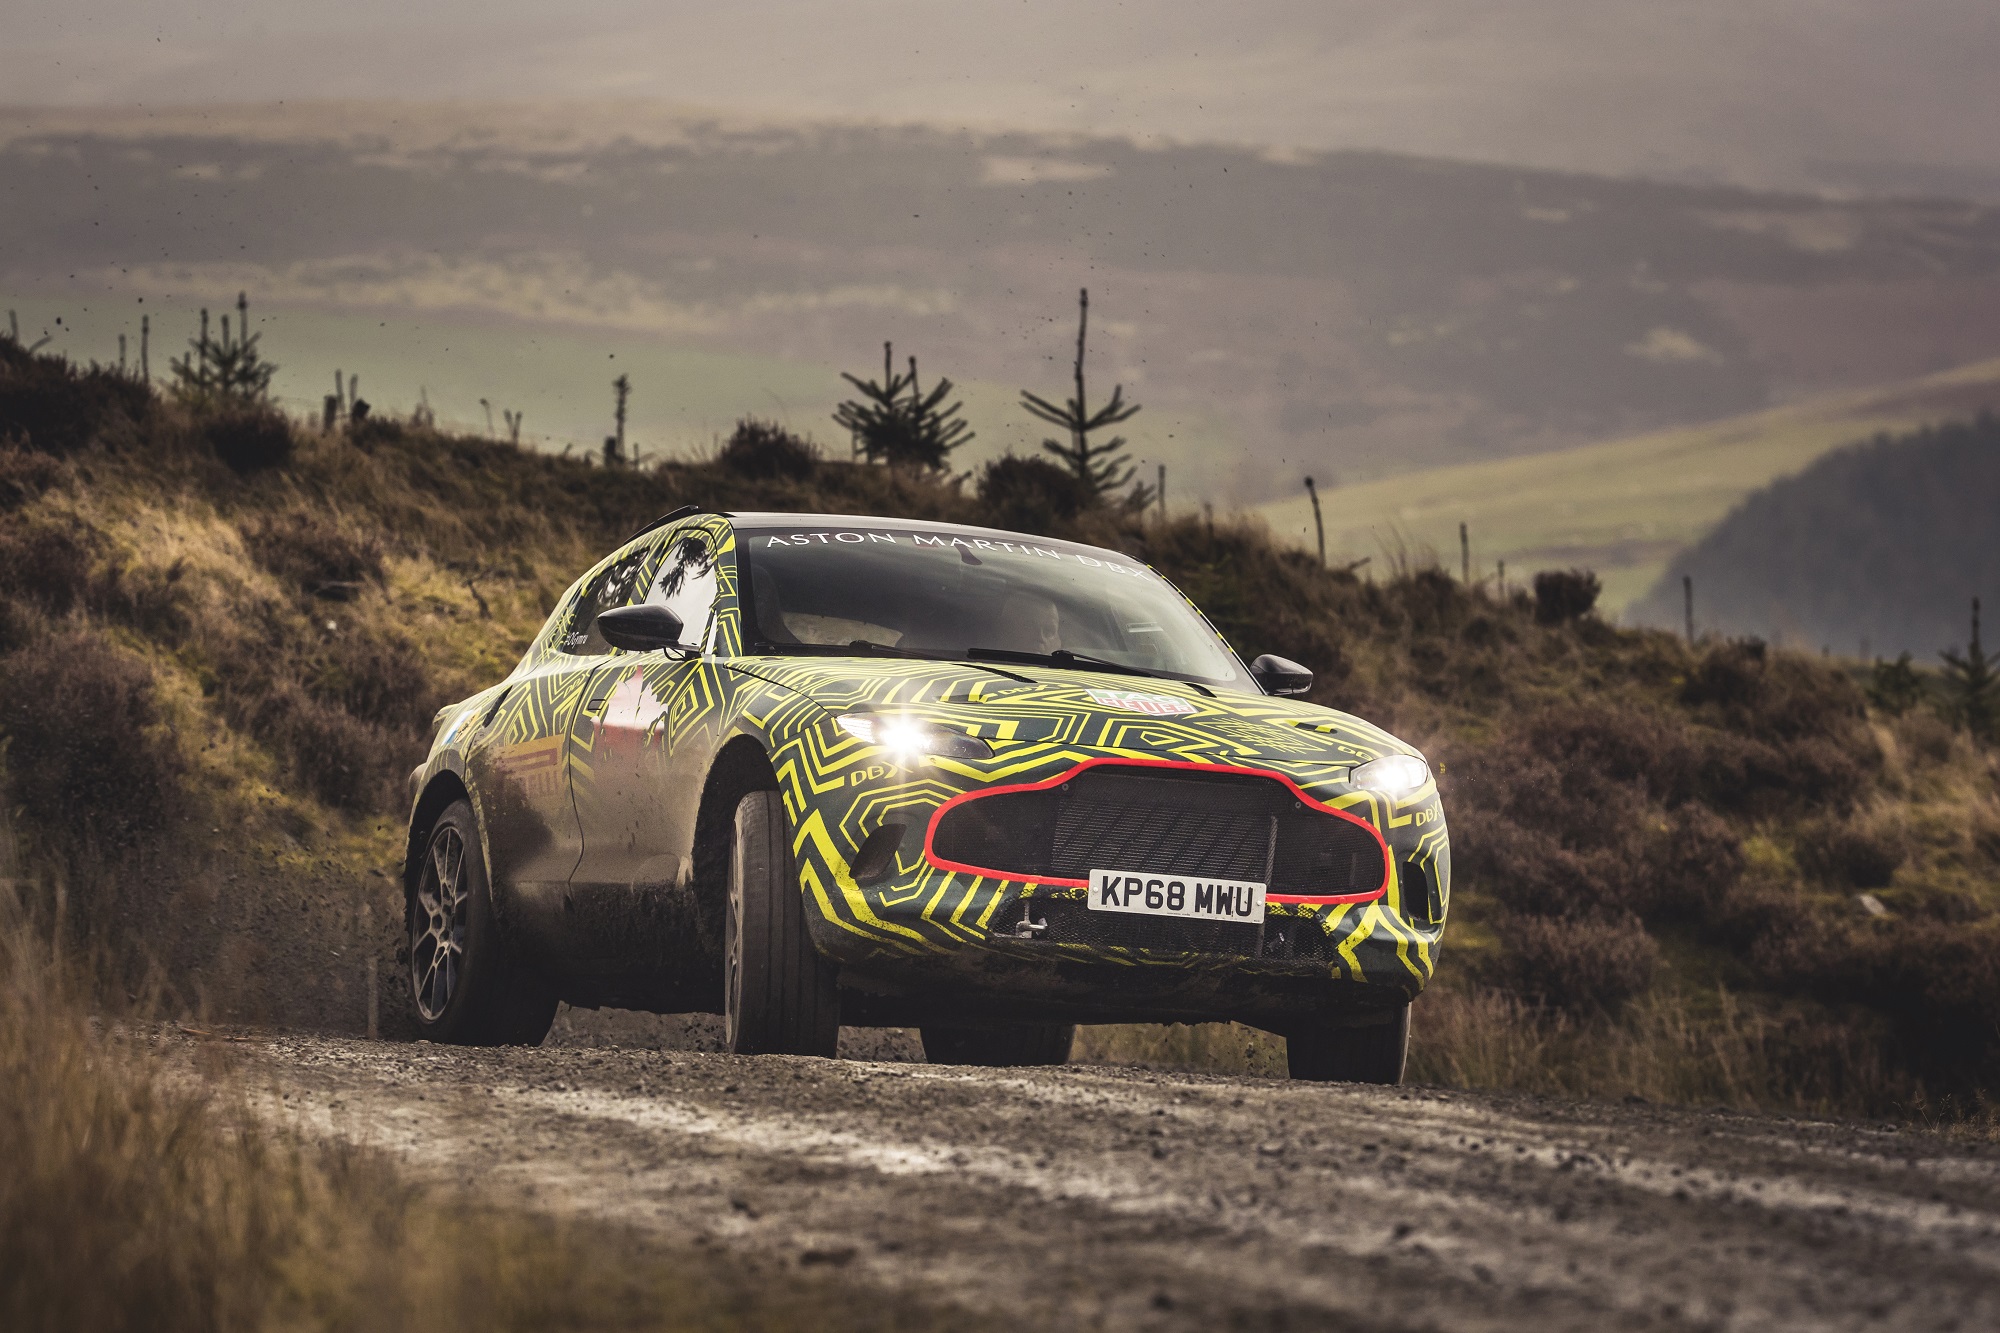 2019 Aston Martin DBX SUV Announcement 6SpeedOnline.com